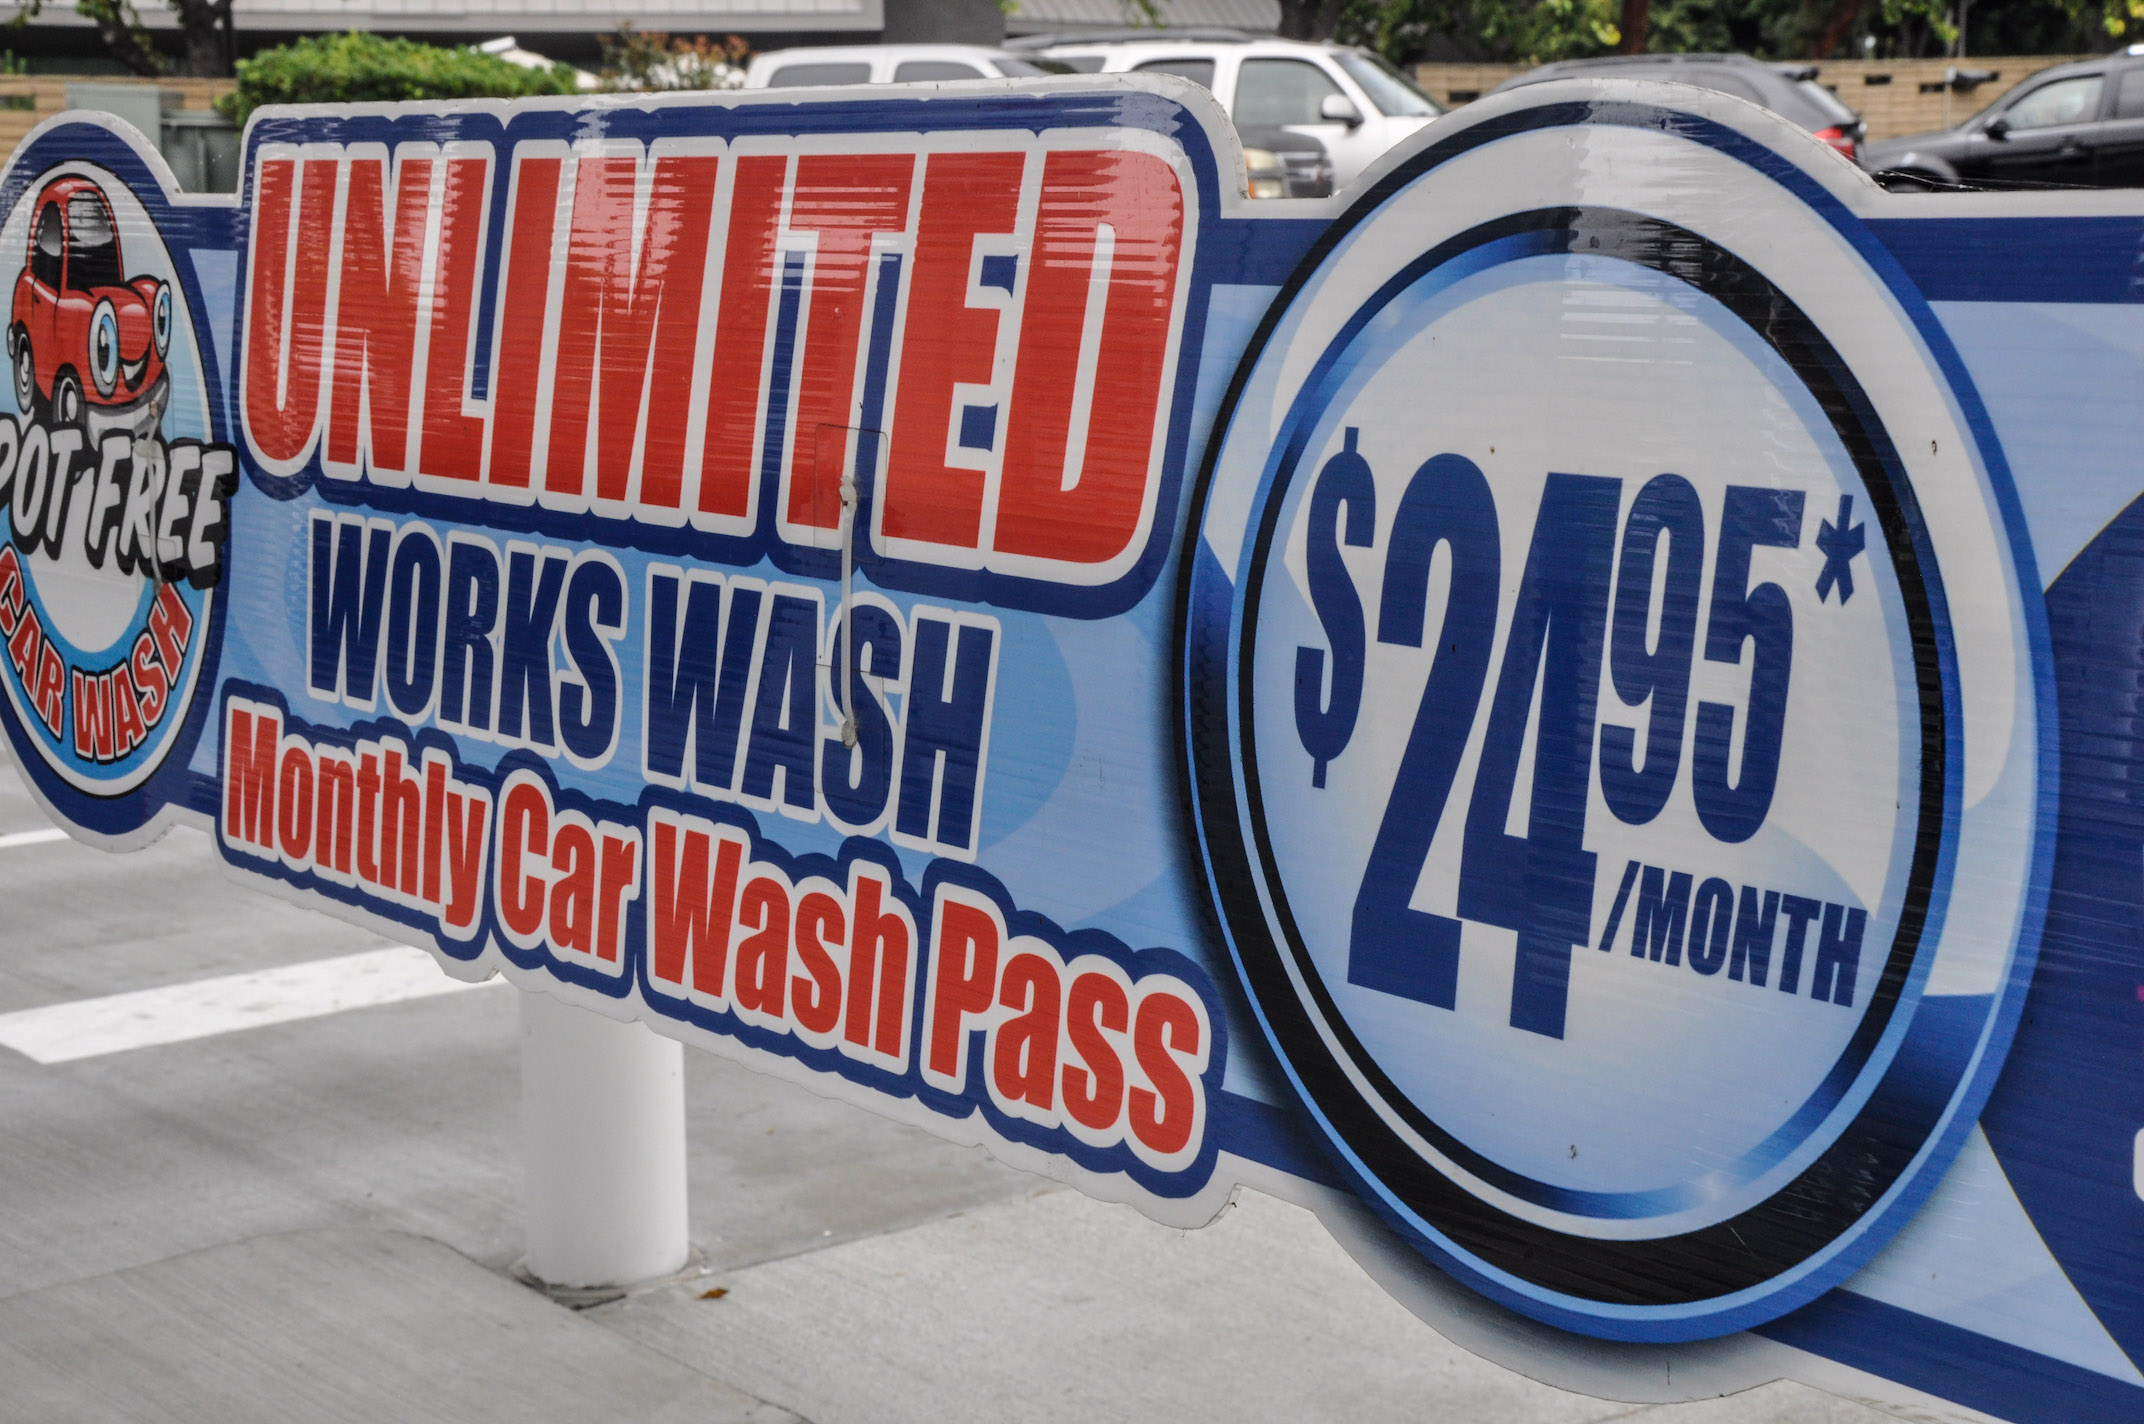 Los Angeles car wash membership deal